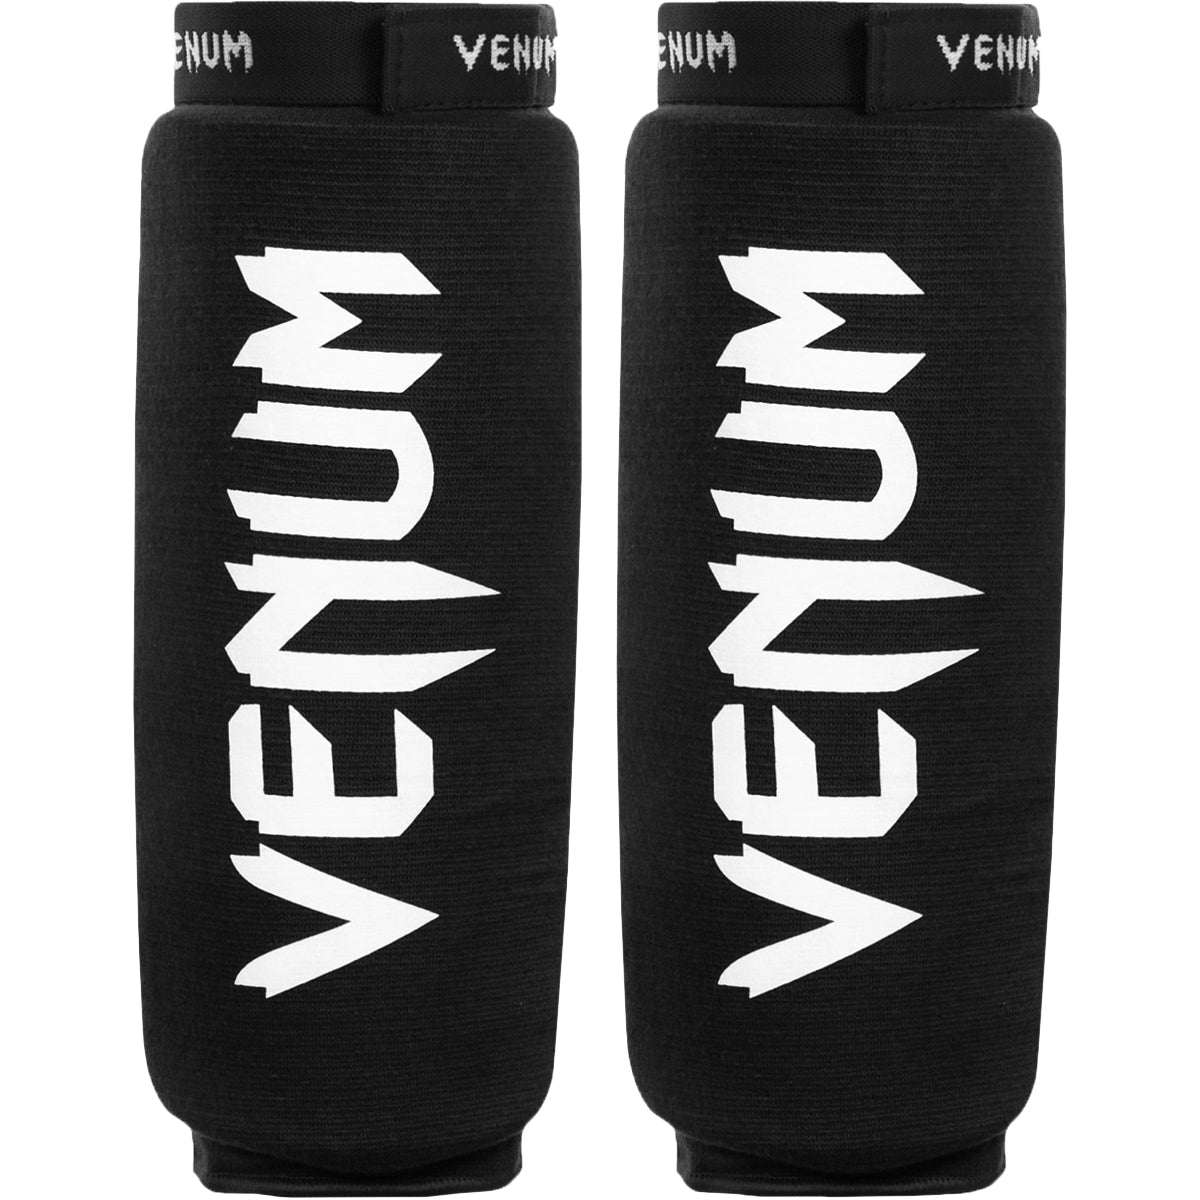 Venum Kontact Protective Slip-On MMA Shin Guards - Black/White Venum